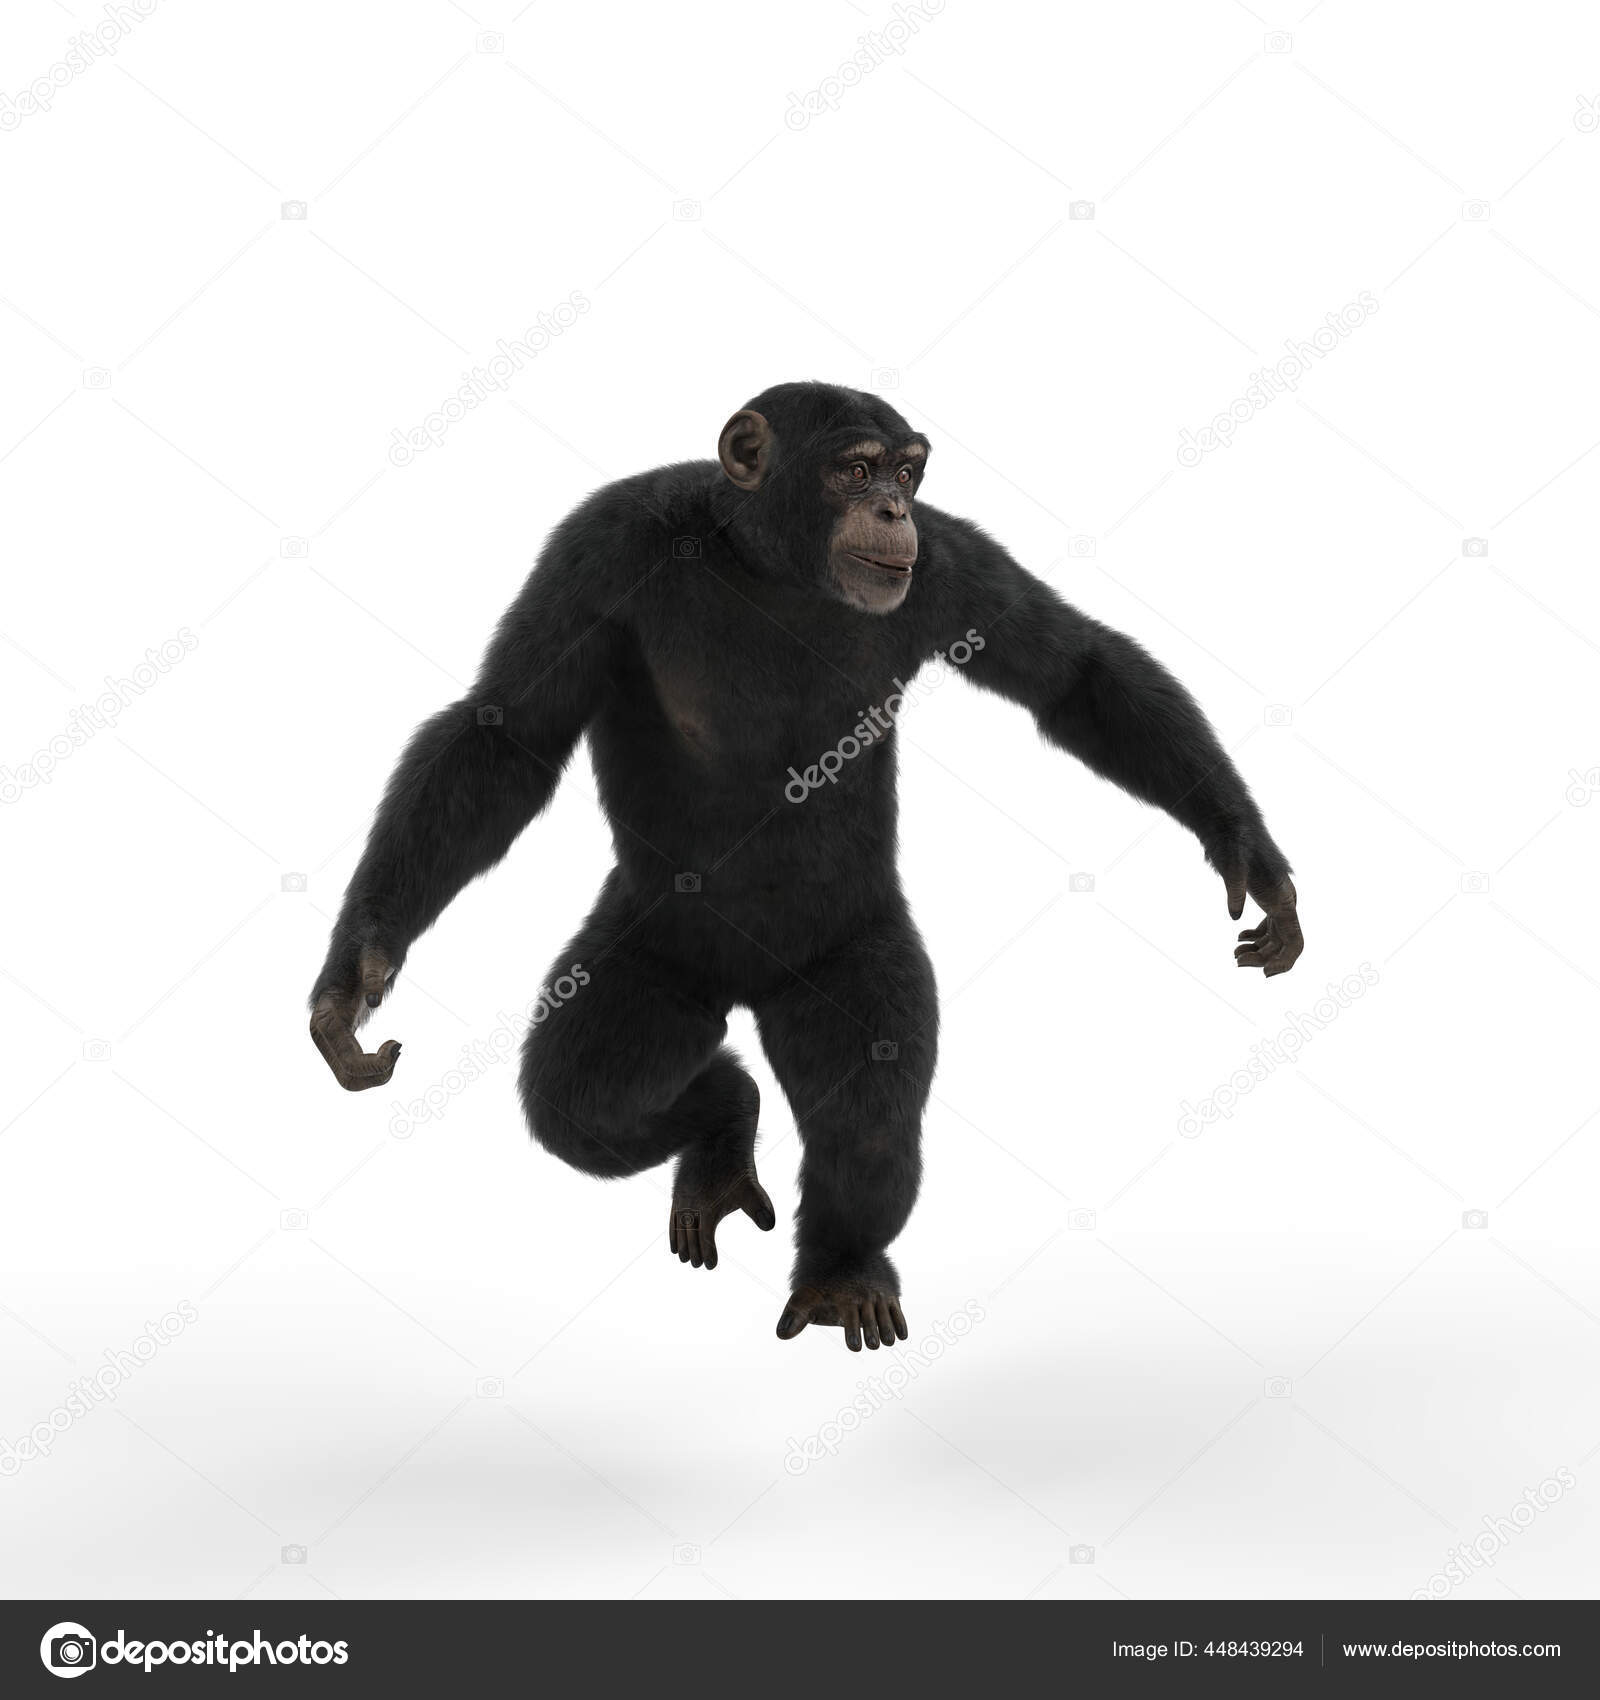 depositphotos_448439294-stock-photo-chimpanzee-walking-looking-left-hand.jpg